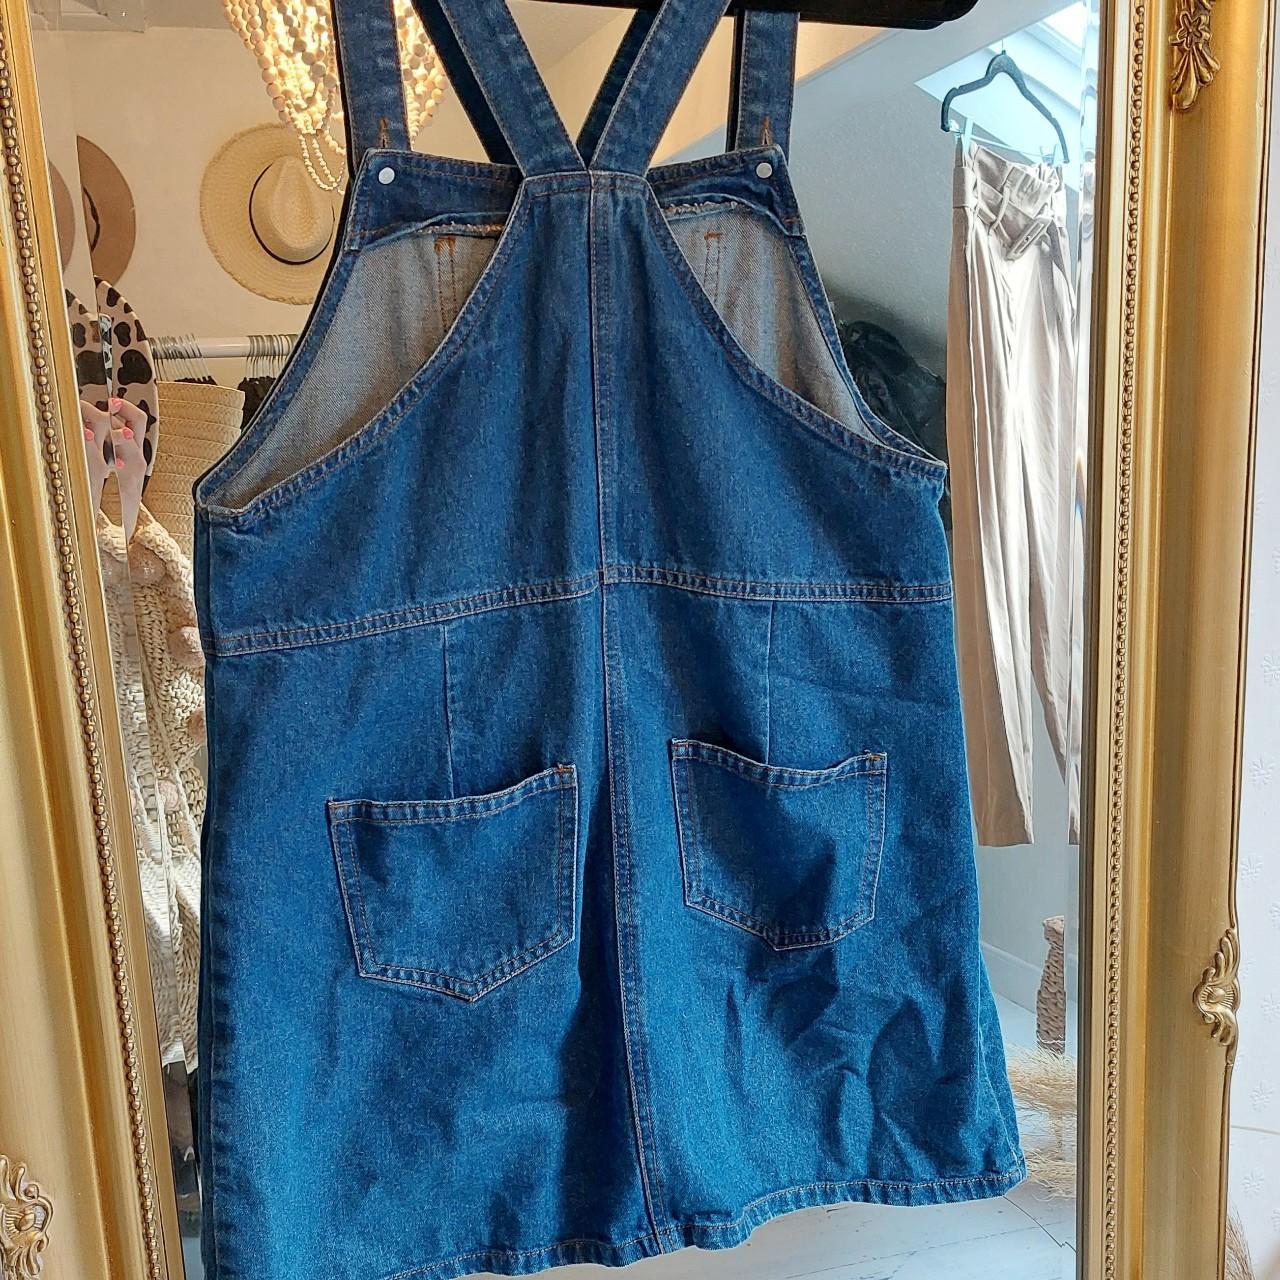 New Look Women's Blue and Navy Dress | Depop